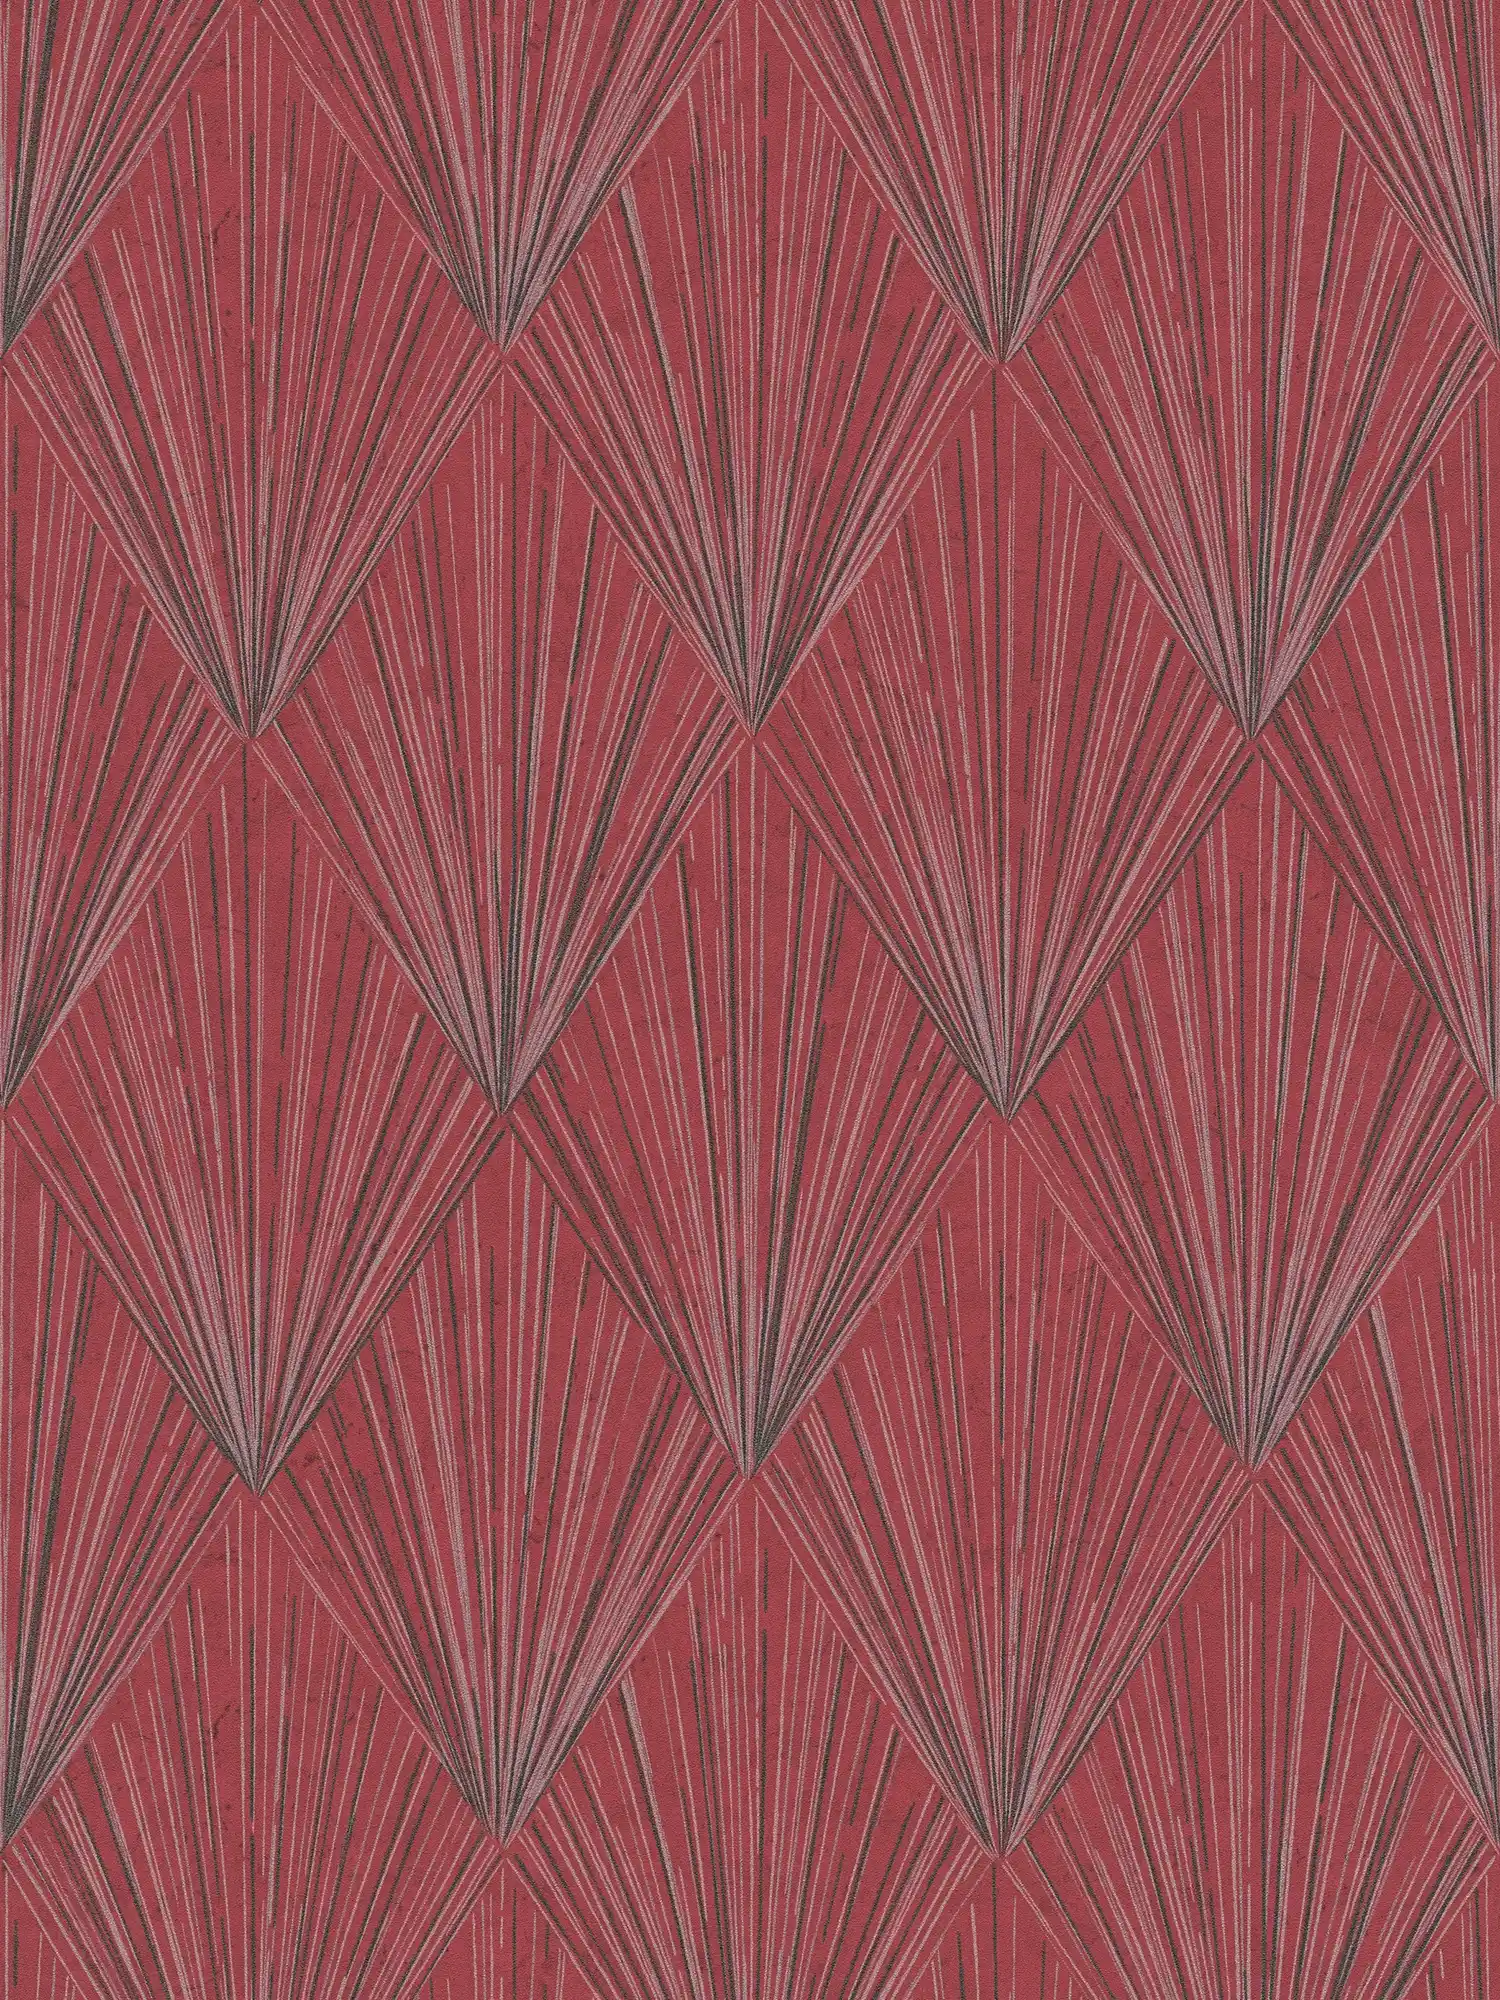 Tapete mit modernem Art Déco Muster & Metallic-Effekt – Metallic, Rot, Schwarz
